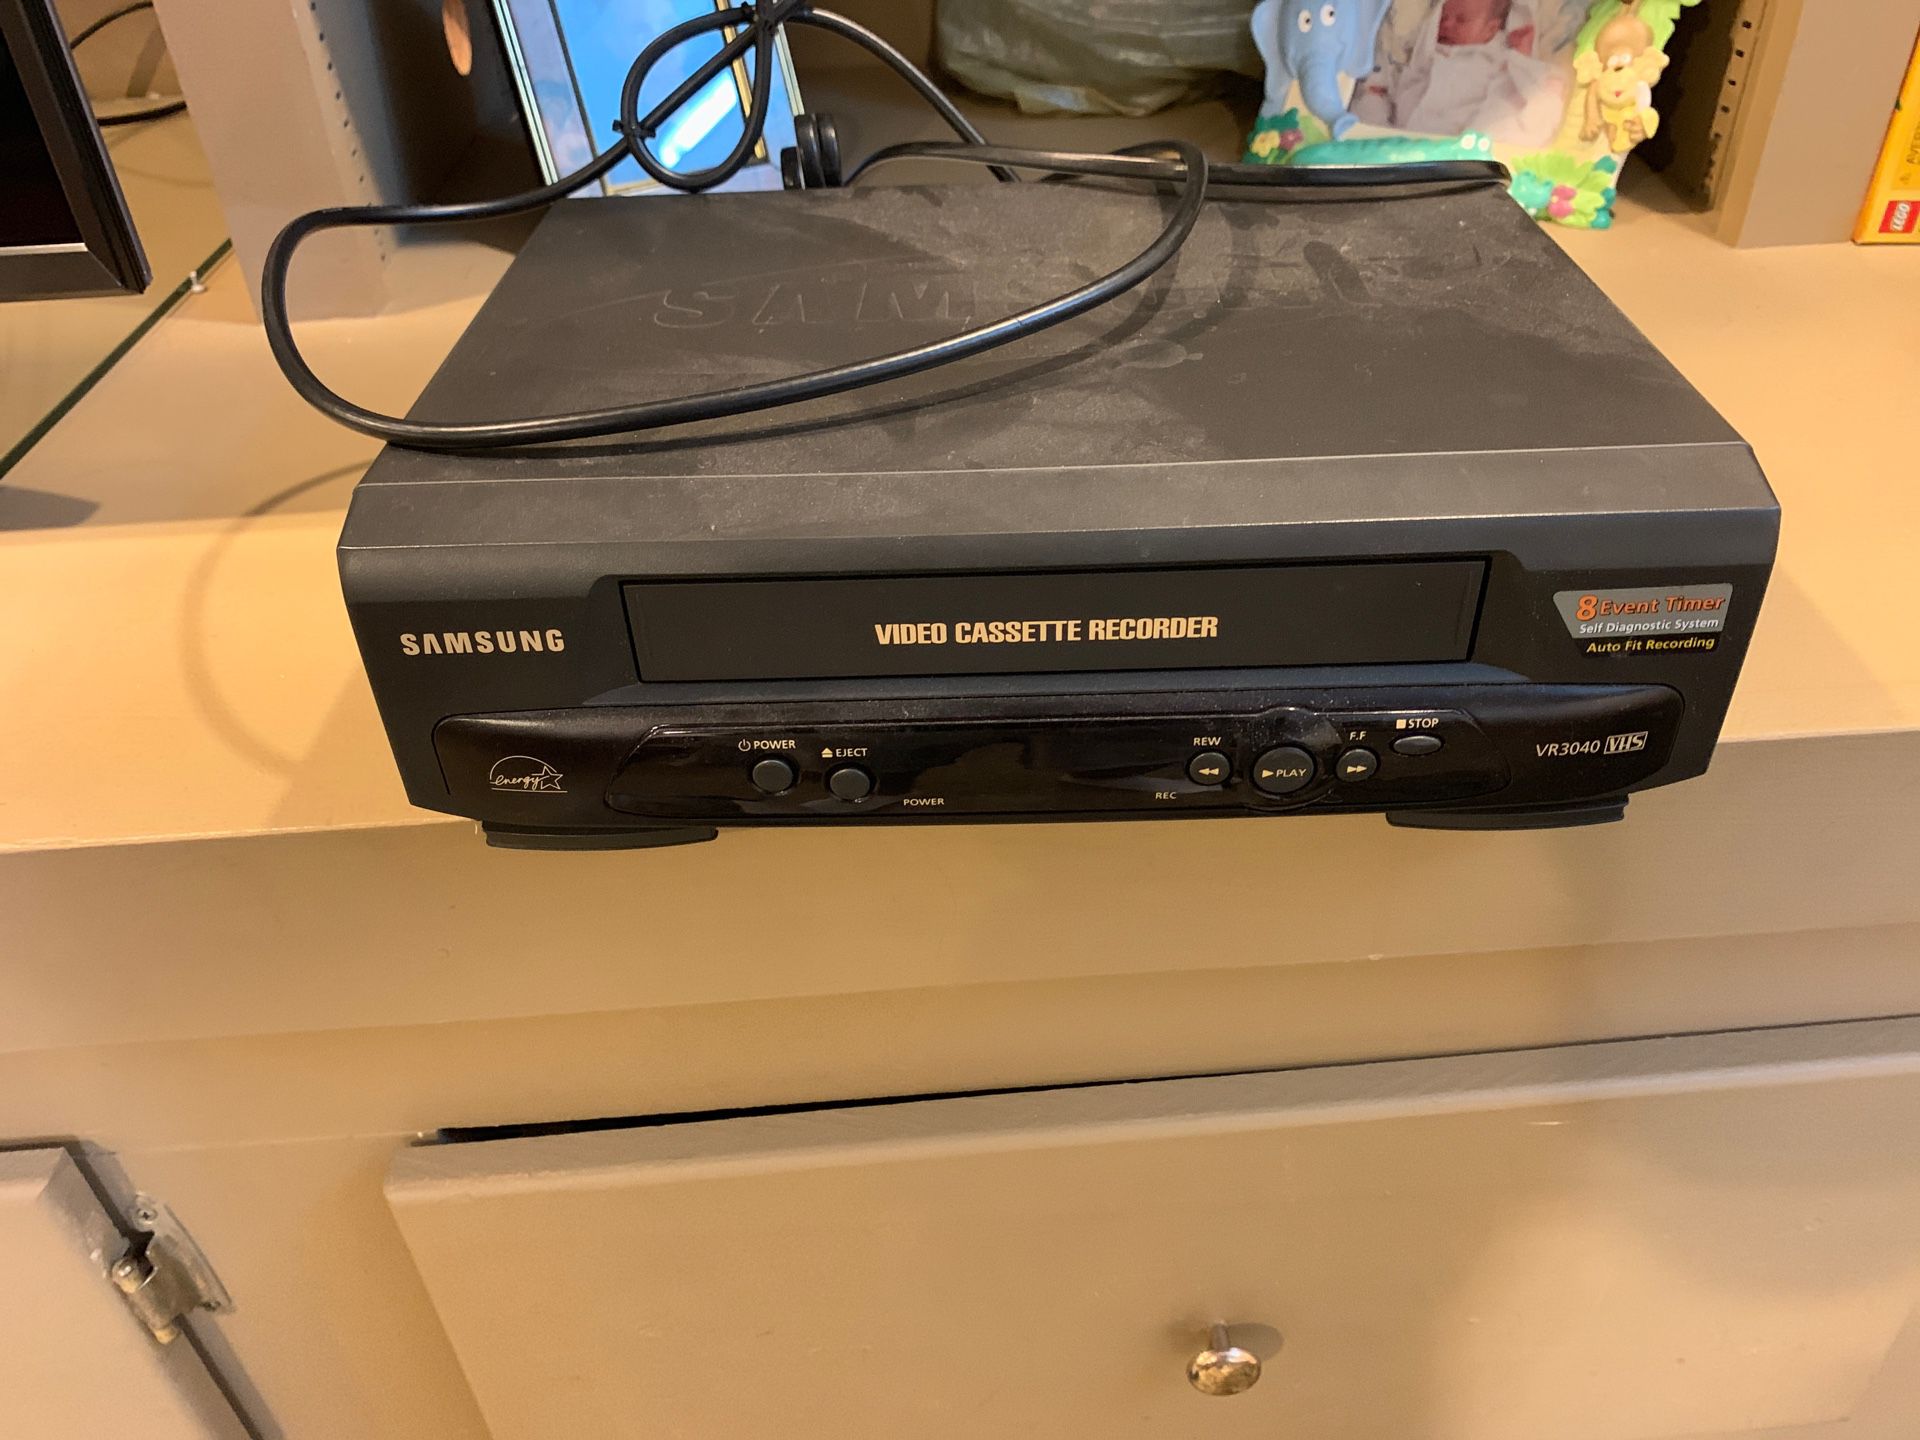 VCR recorder